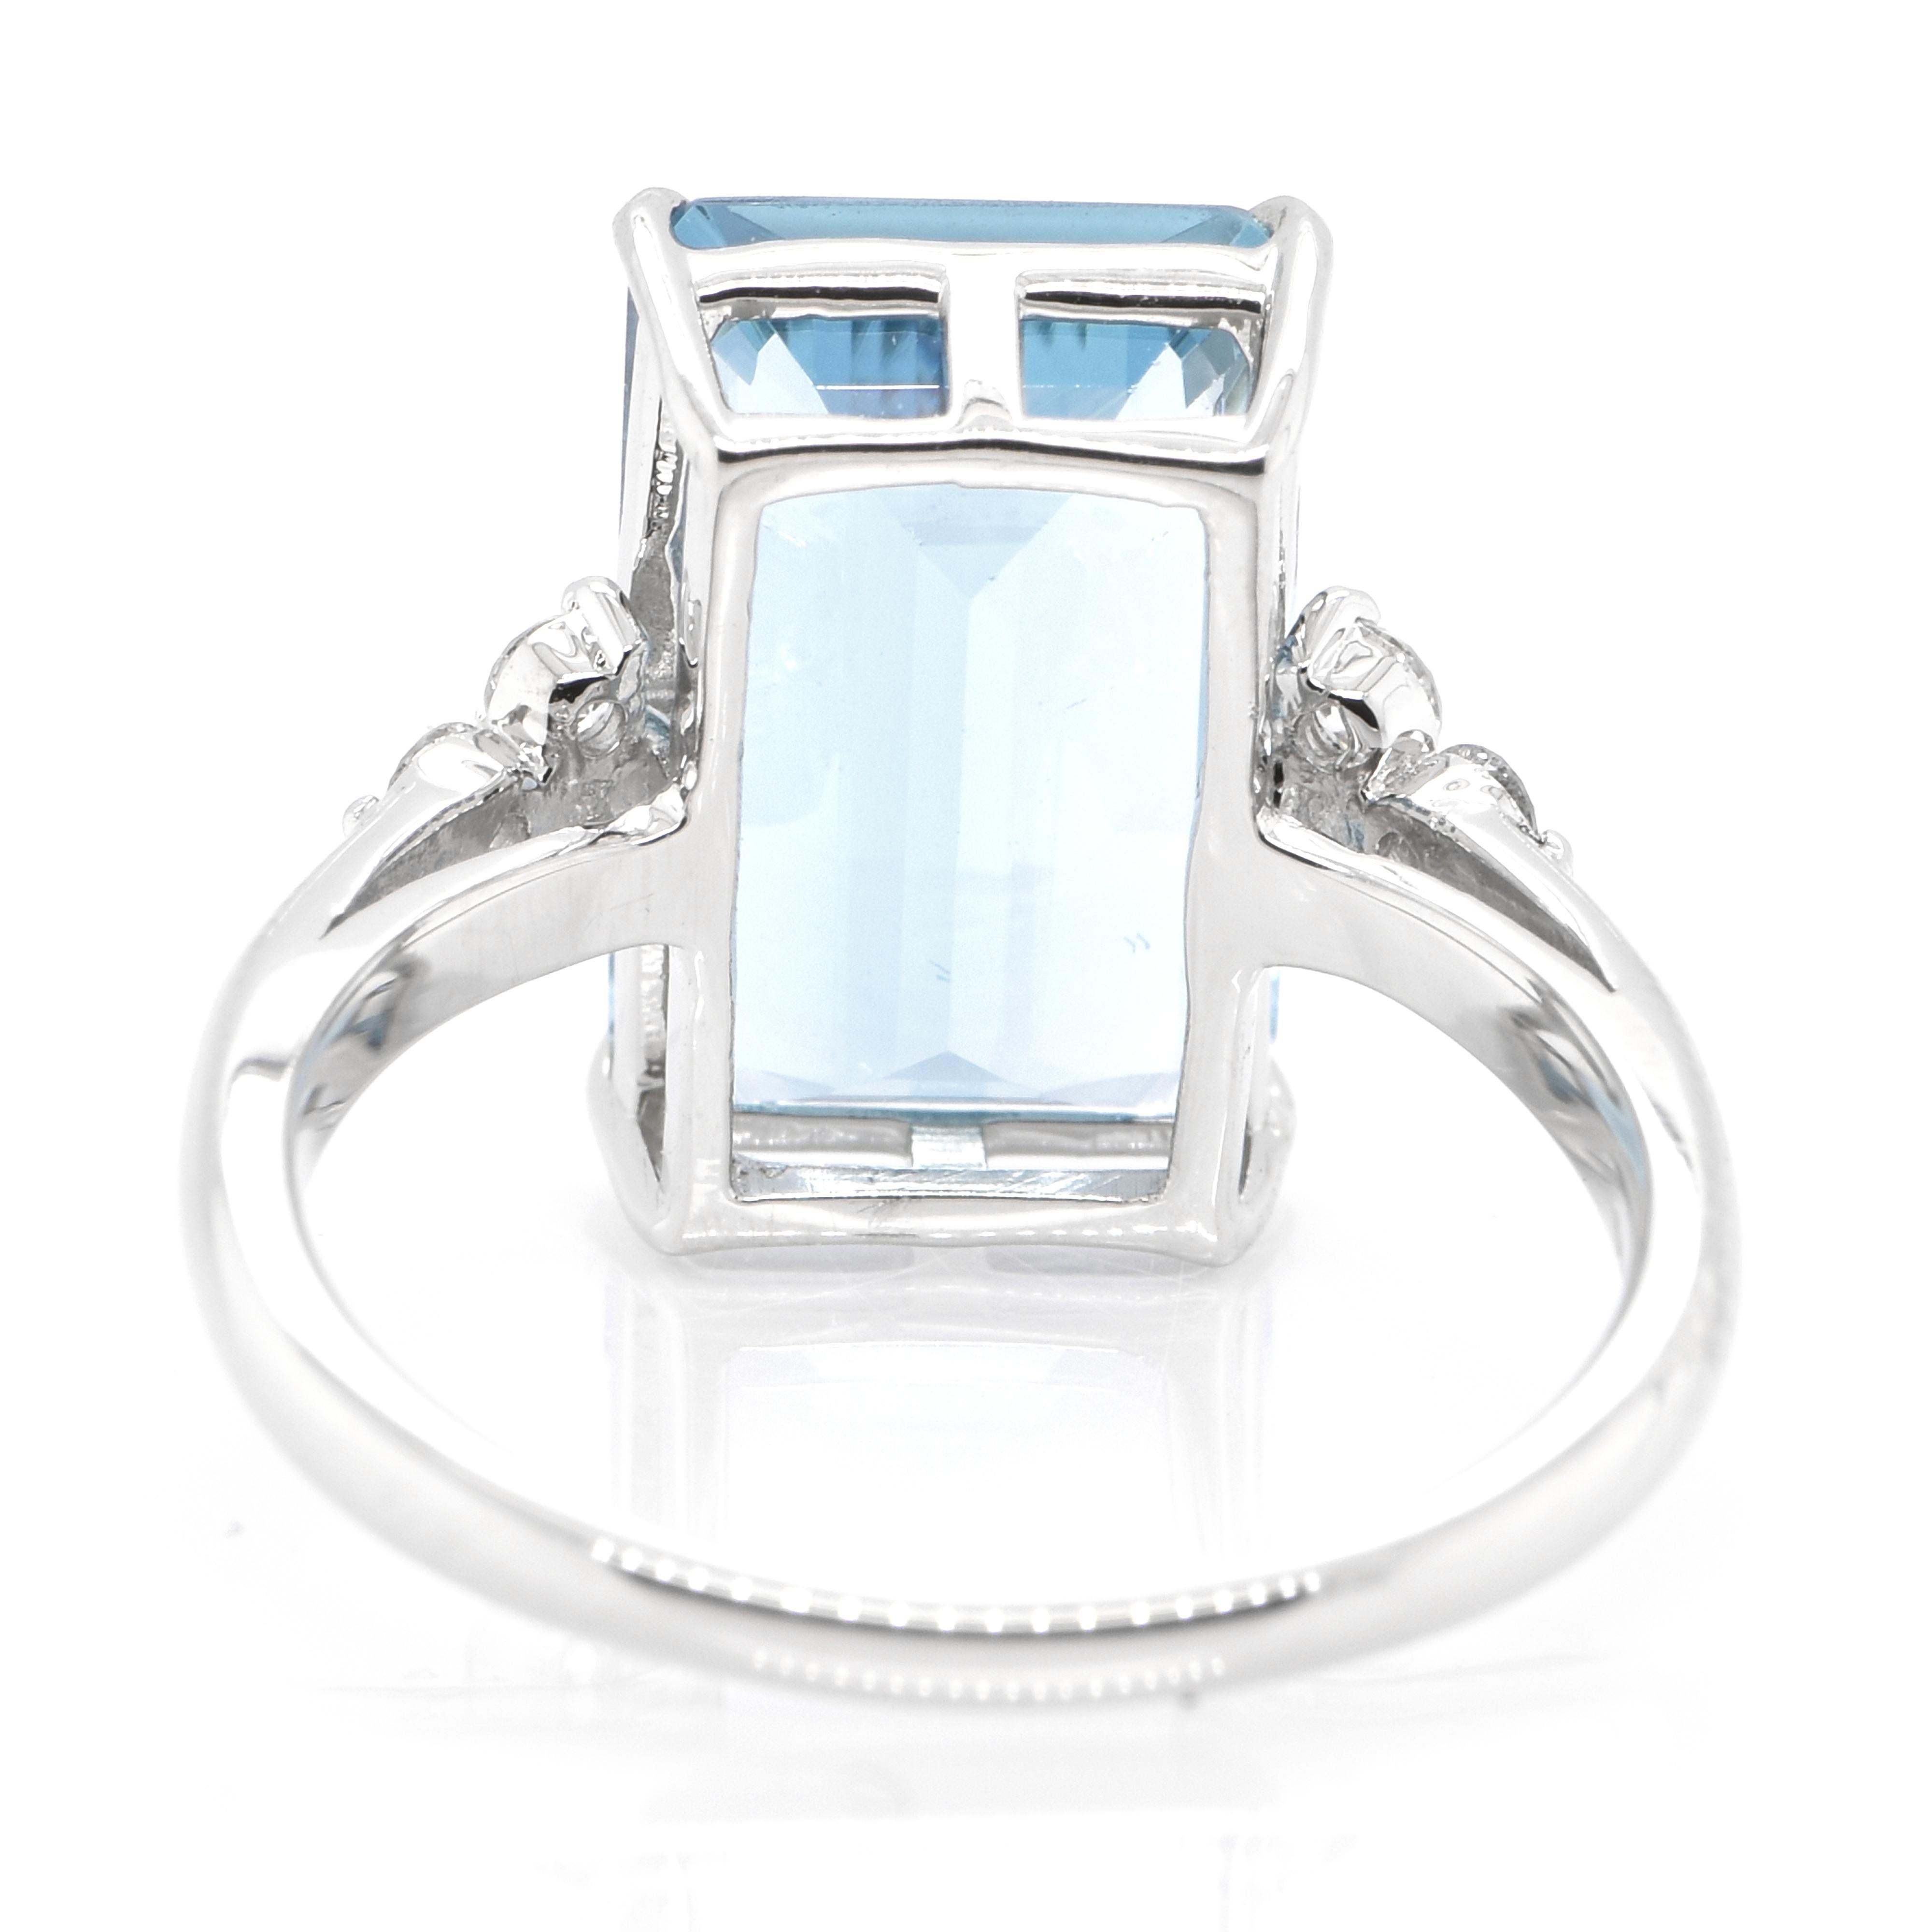 Women's 4.57 Carat Natural Aquamarine and Diamond Cocktail Ring Set in Platinum For Sale